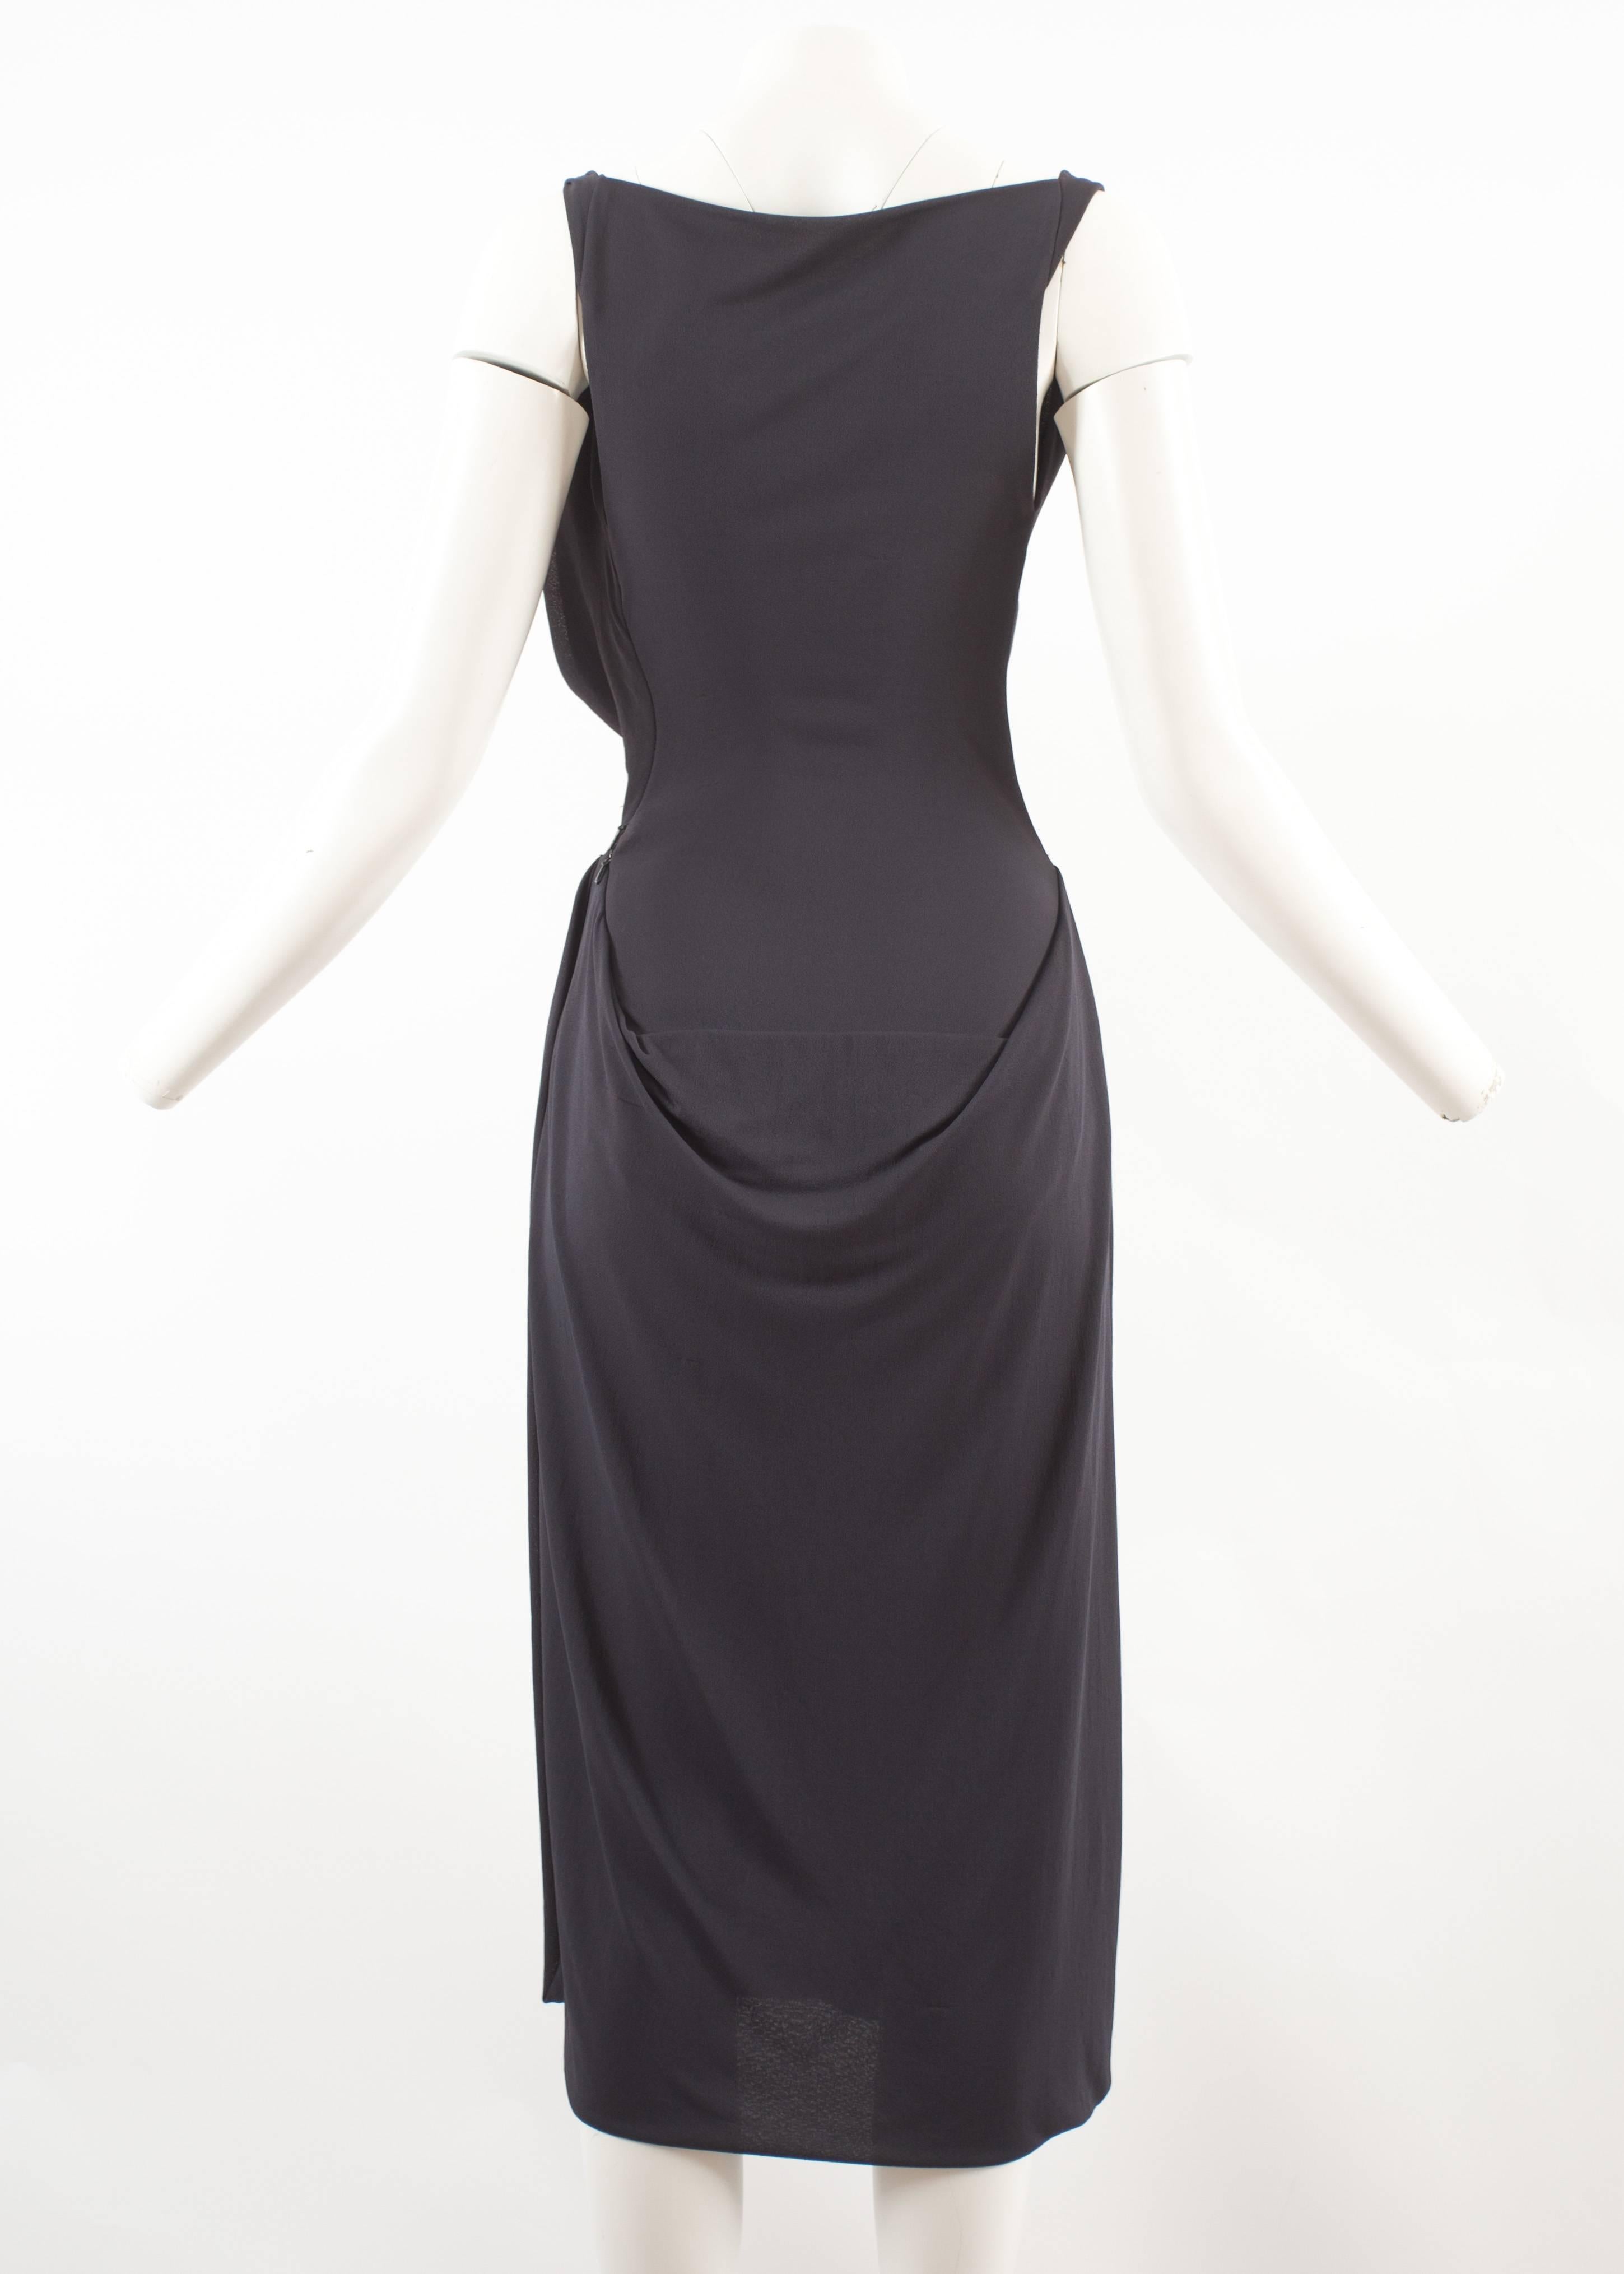 Black Vivienne Westwood Spring-Summer 1997 mid length draped evening dress